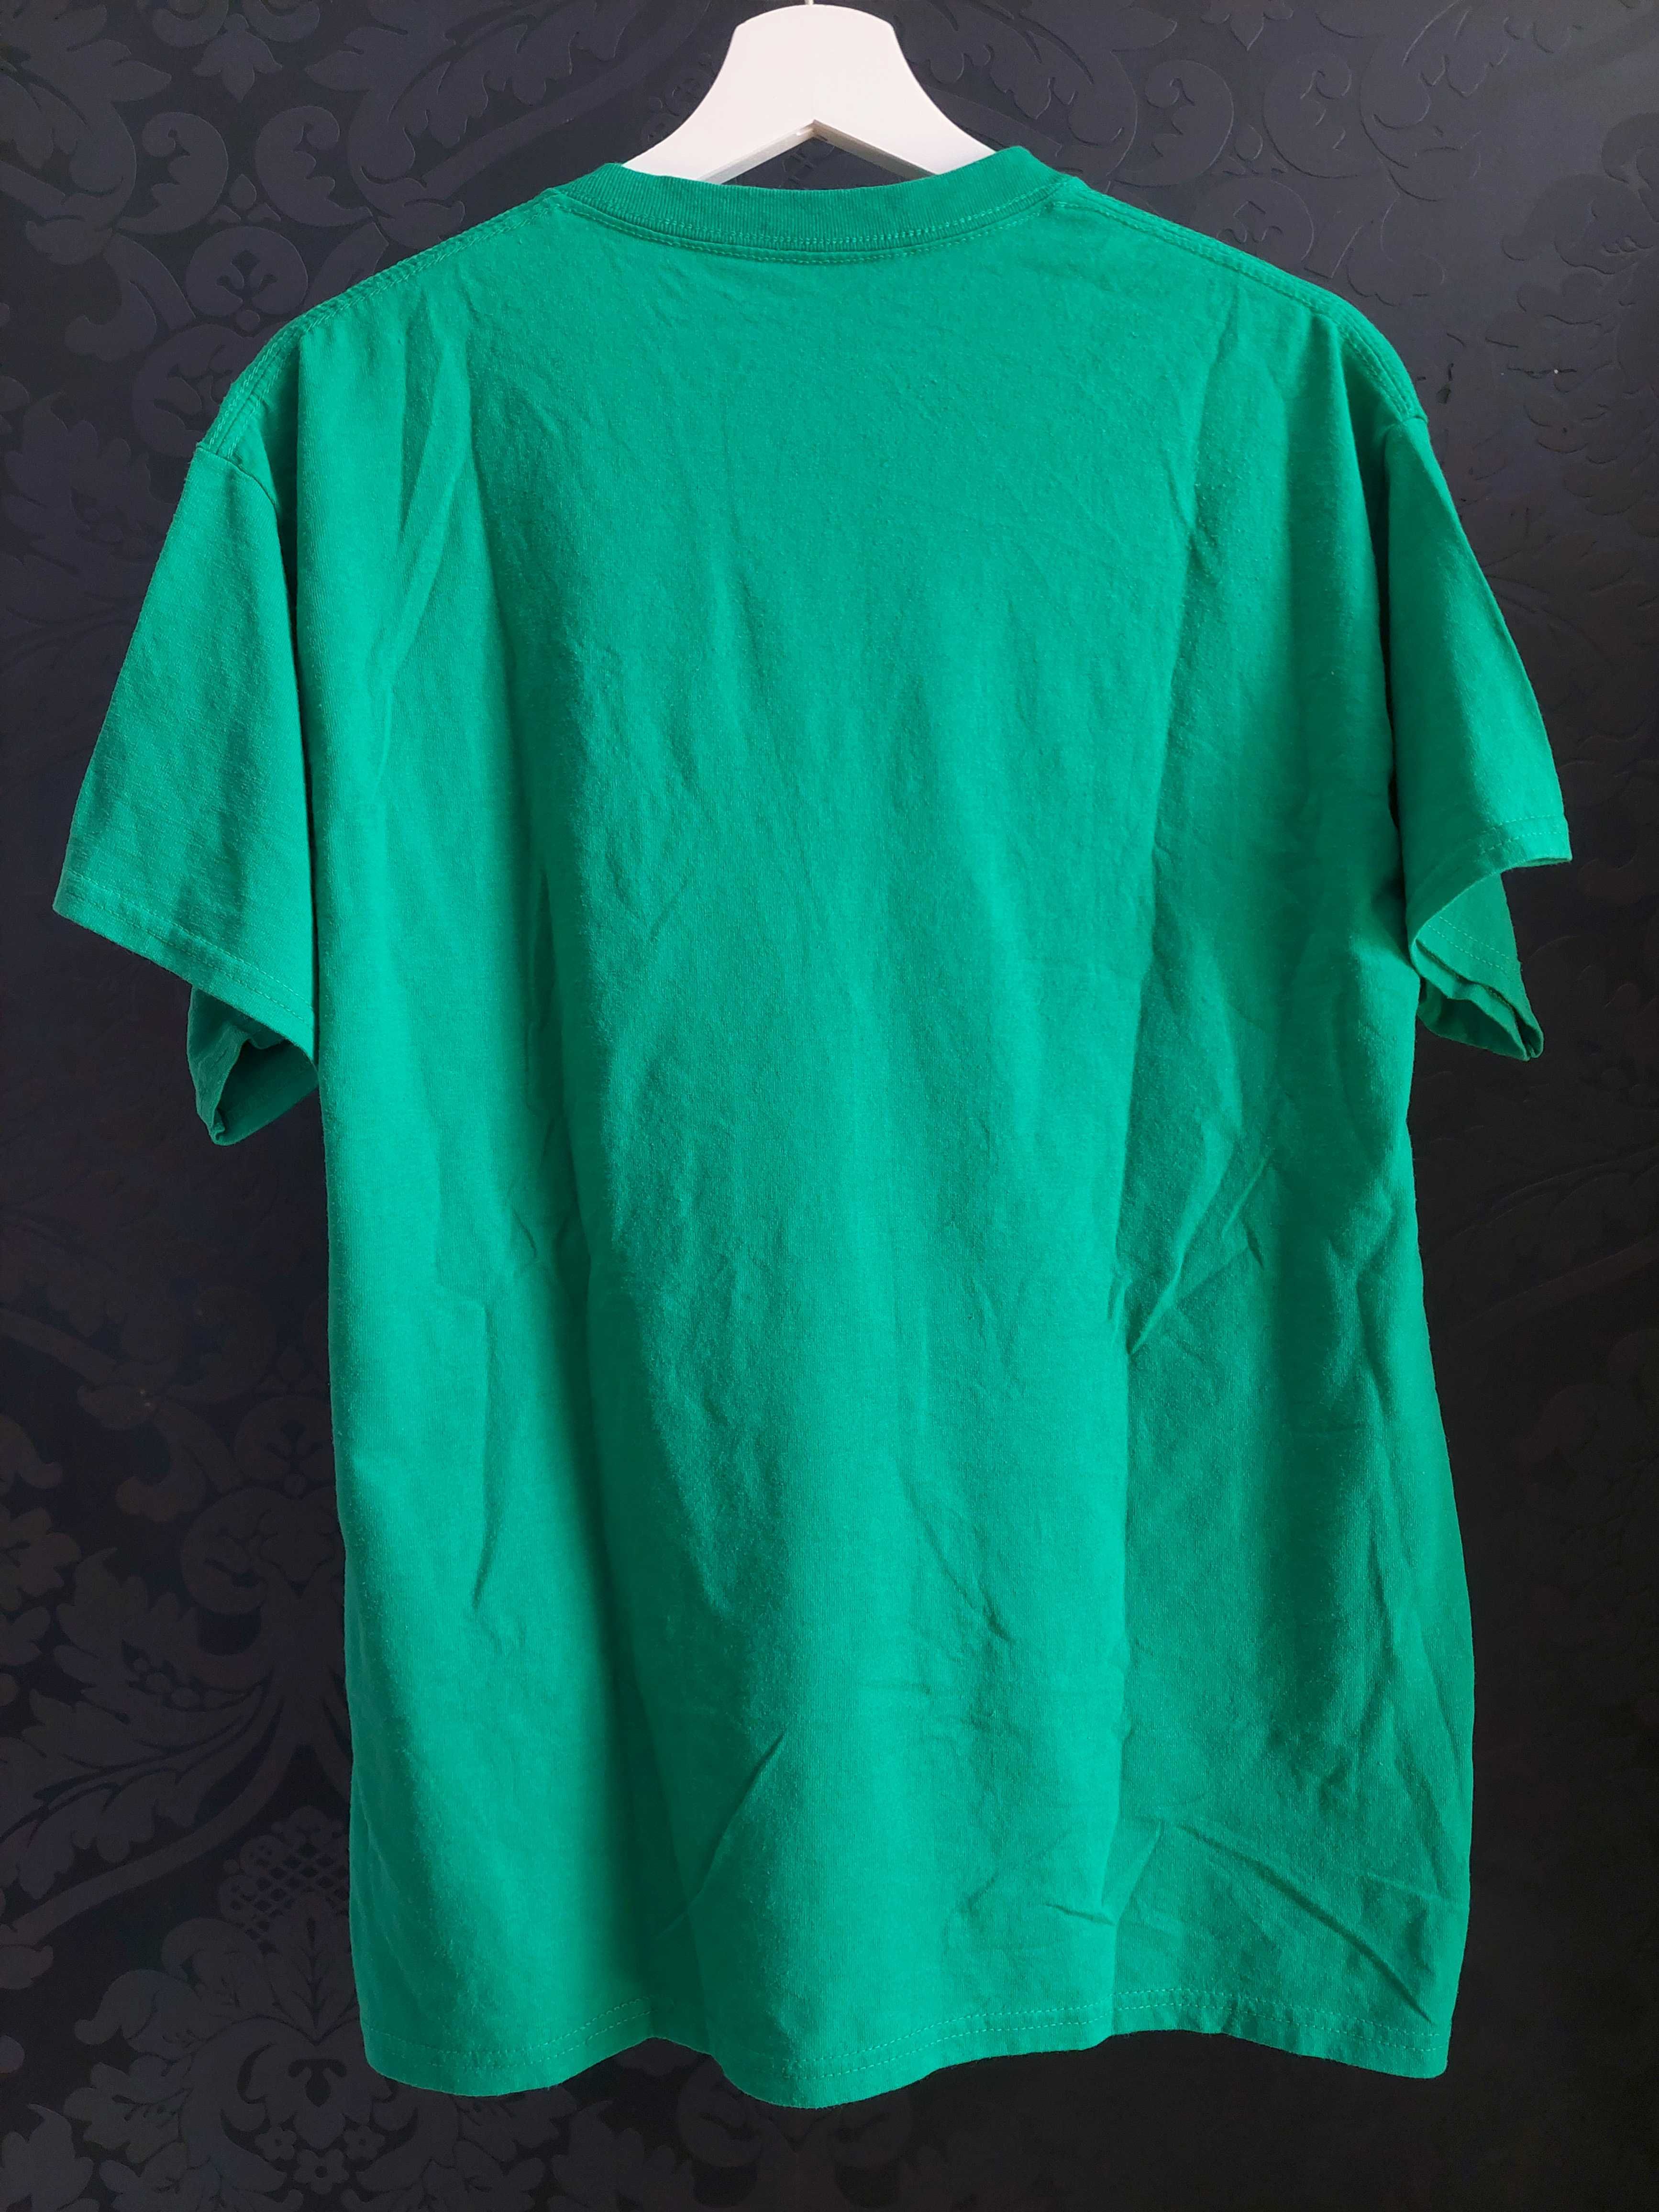 Koszulka XL/L Zielona ACY8 Dare Devils Damska Męska Duża Oversized